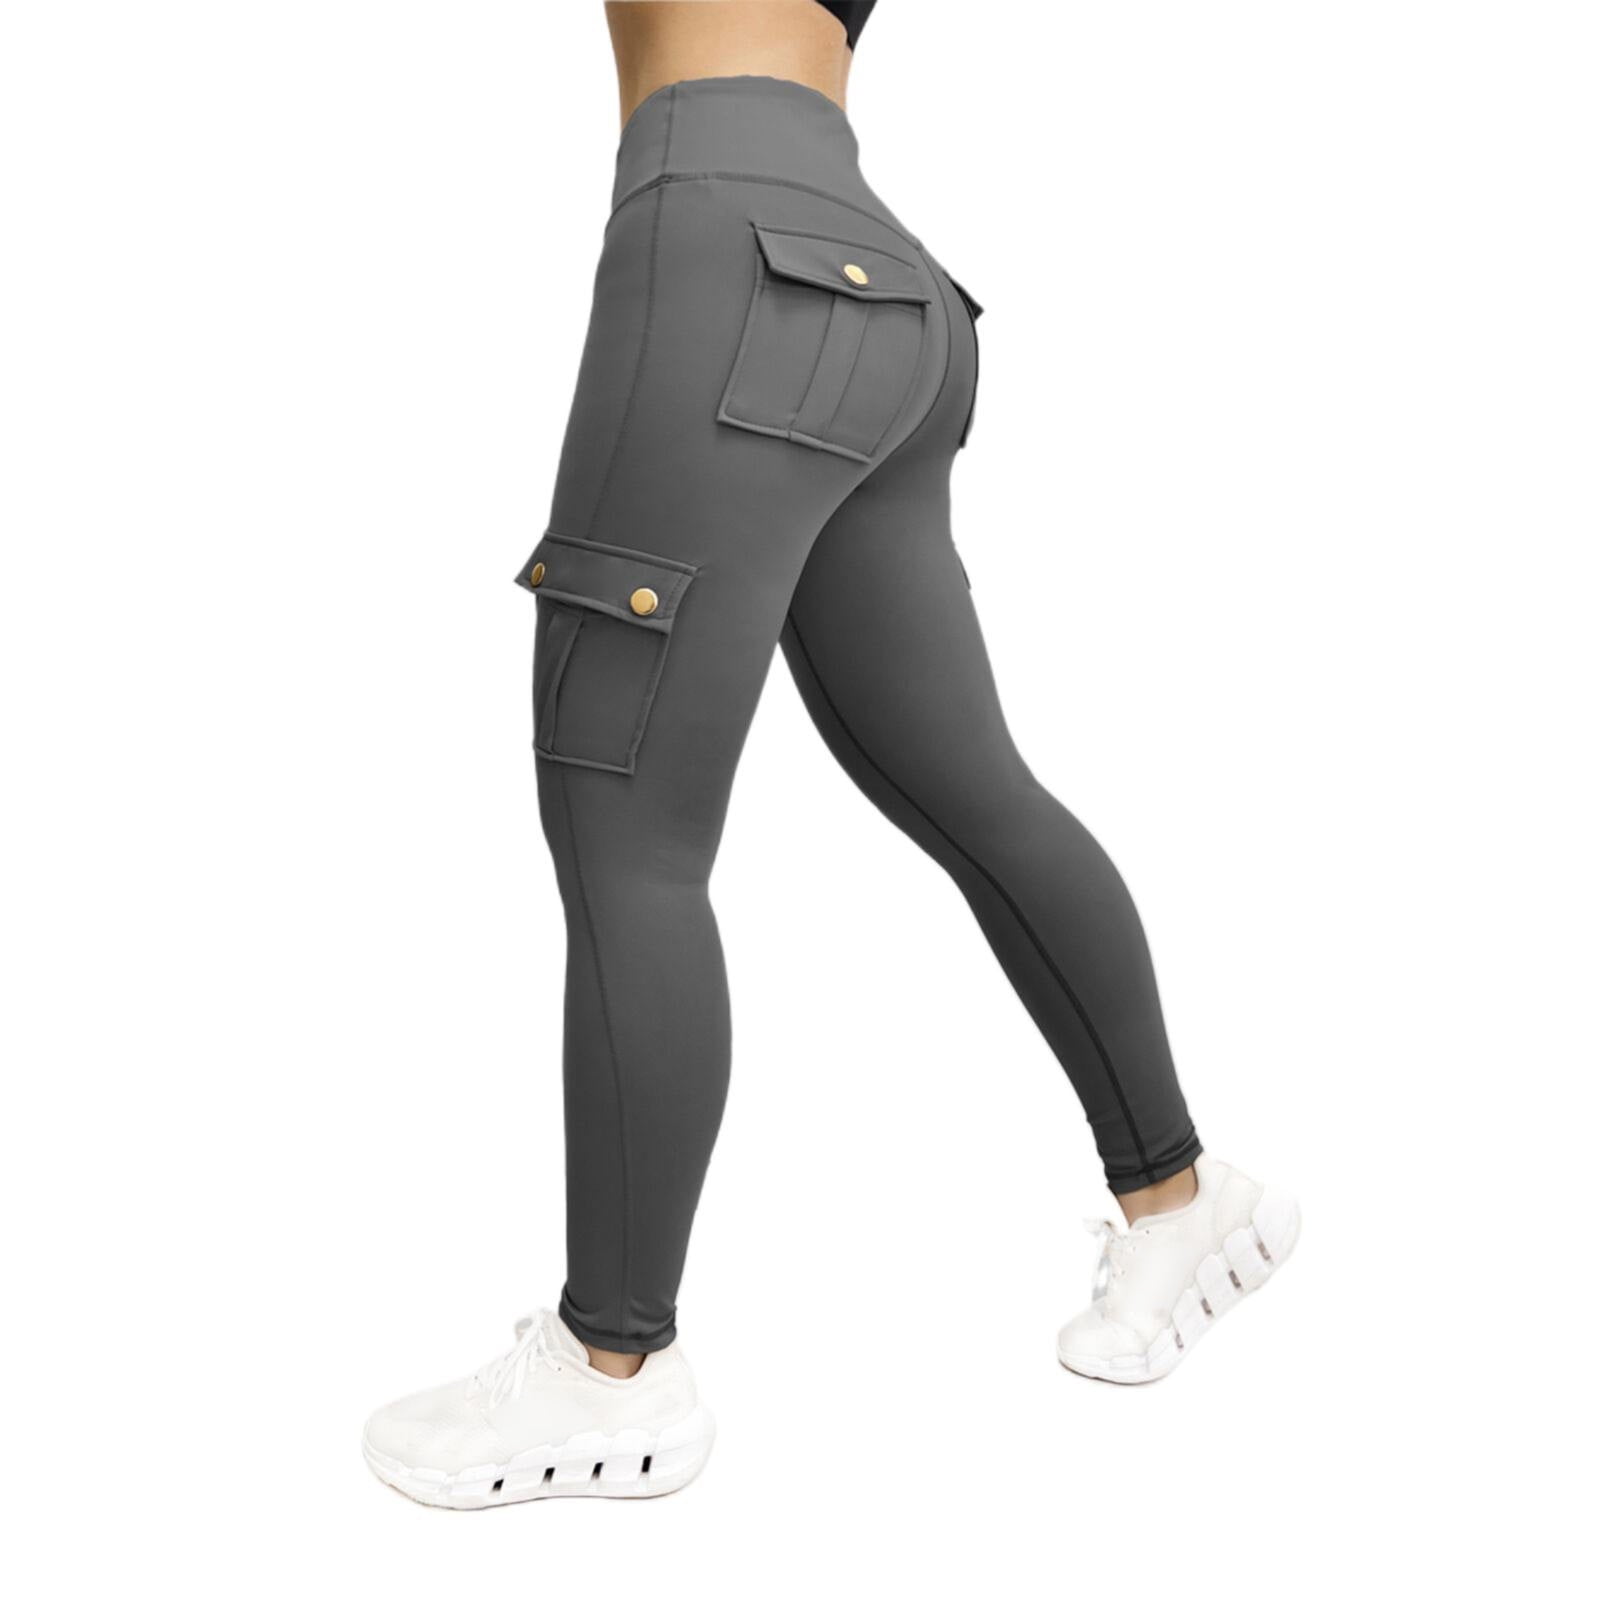 XFLWAM Butt Leggings with Pockets for Women High Waist Cargo Pants Work  Pants Gym Workout Leggings Gray L 